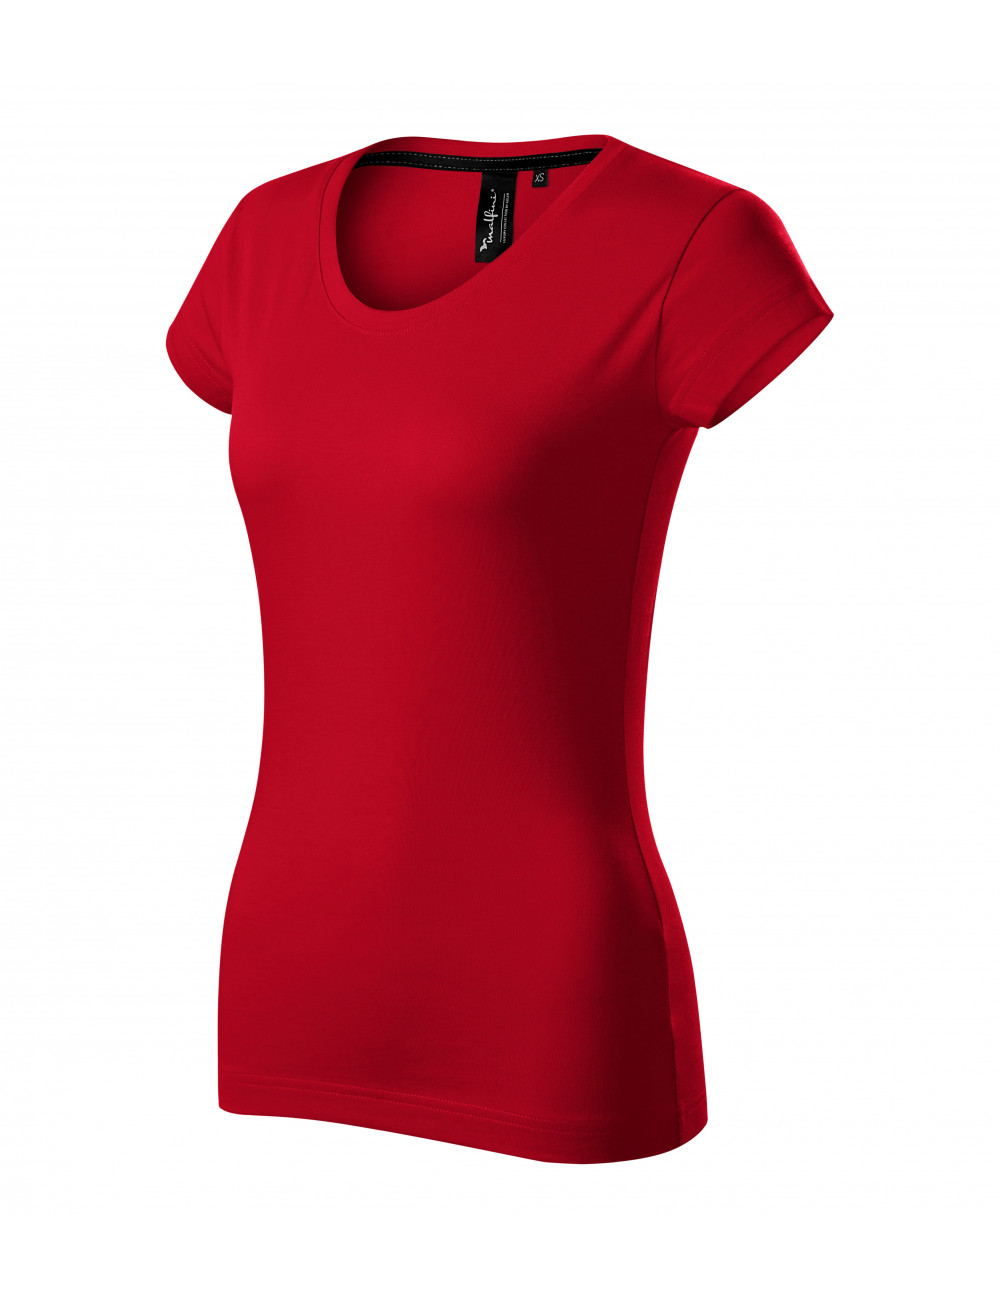 Women`s exclusive t-shirt 154 formula red Adler Malfinipremium